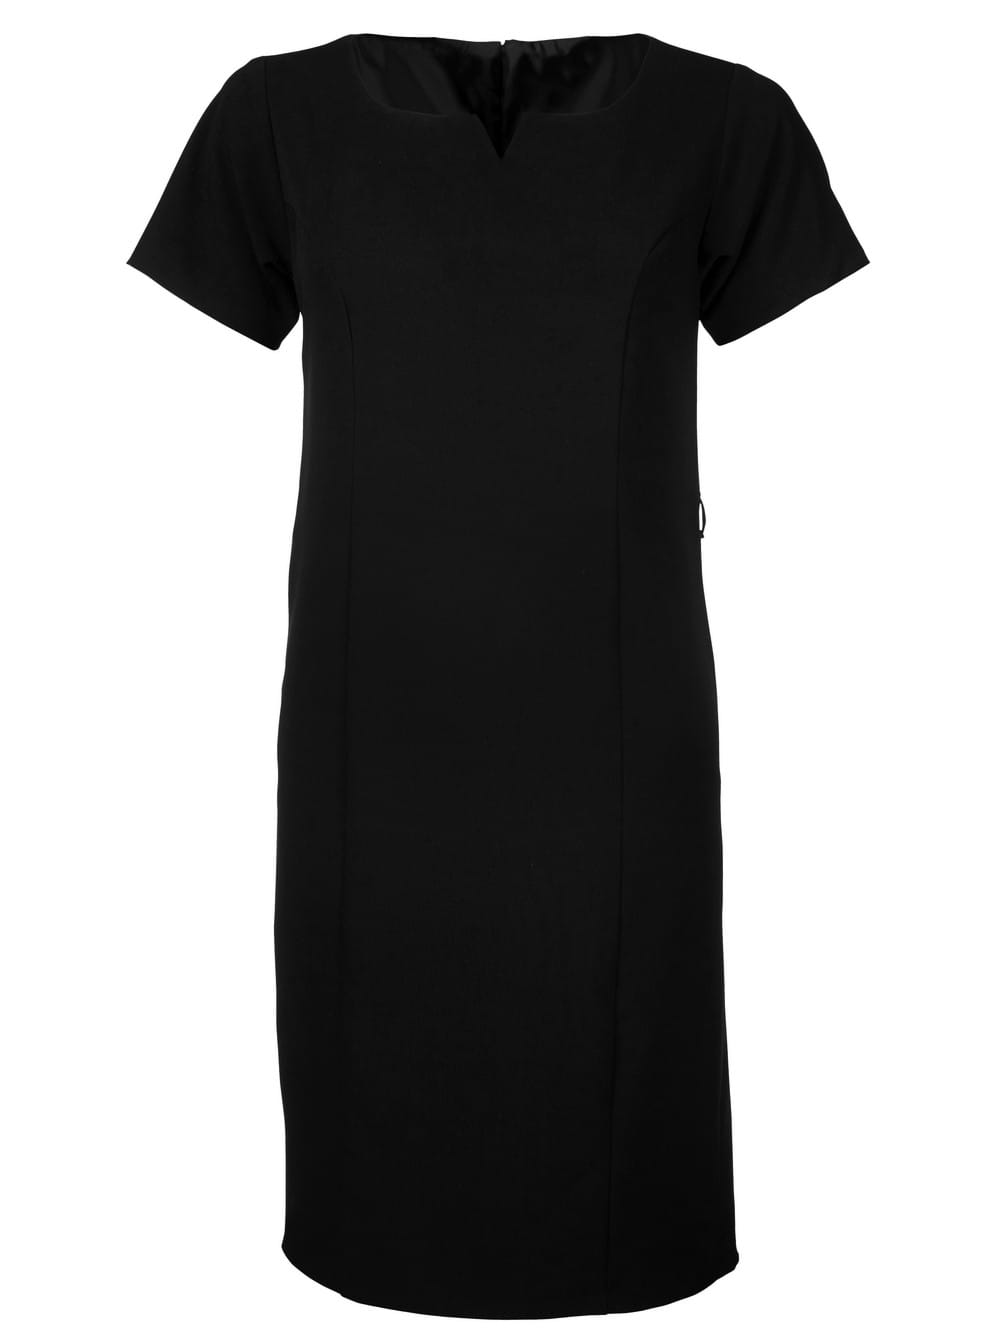 Carol 505 S/S Dress - Black